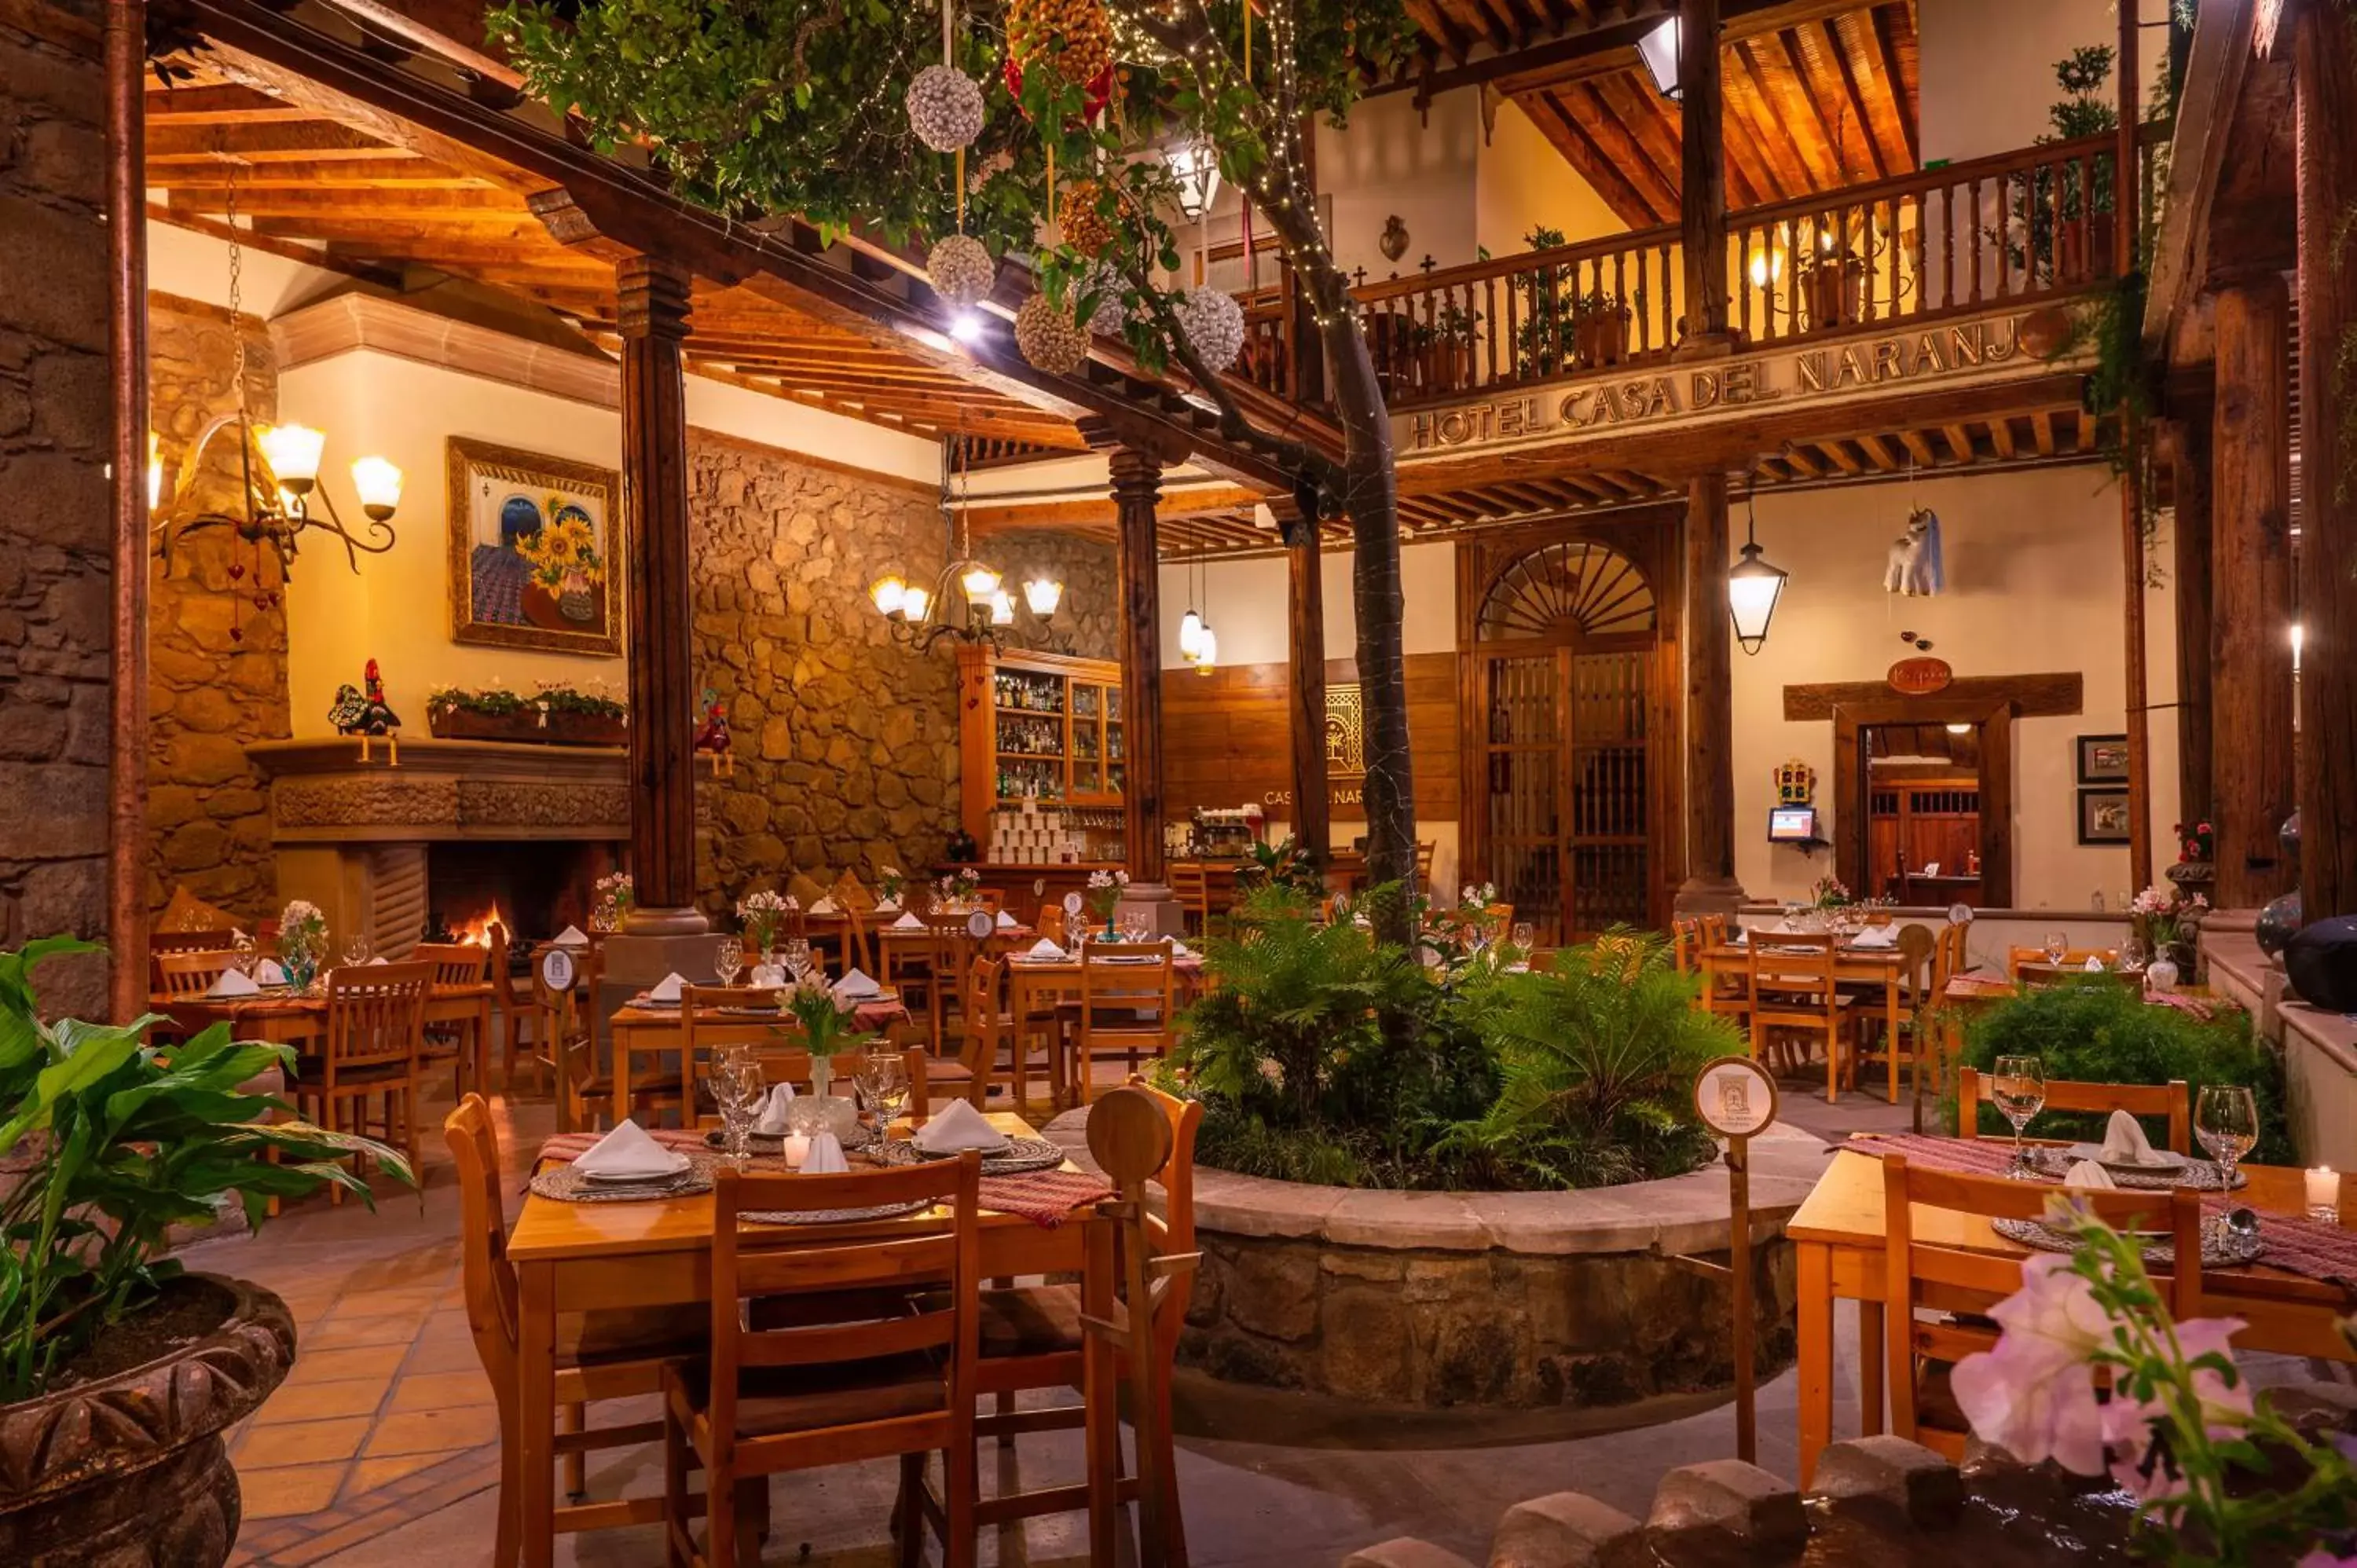 Restaurant/Places to Eat in Hotel Casa del Naranjo